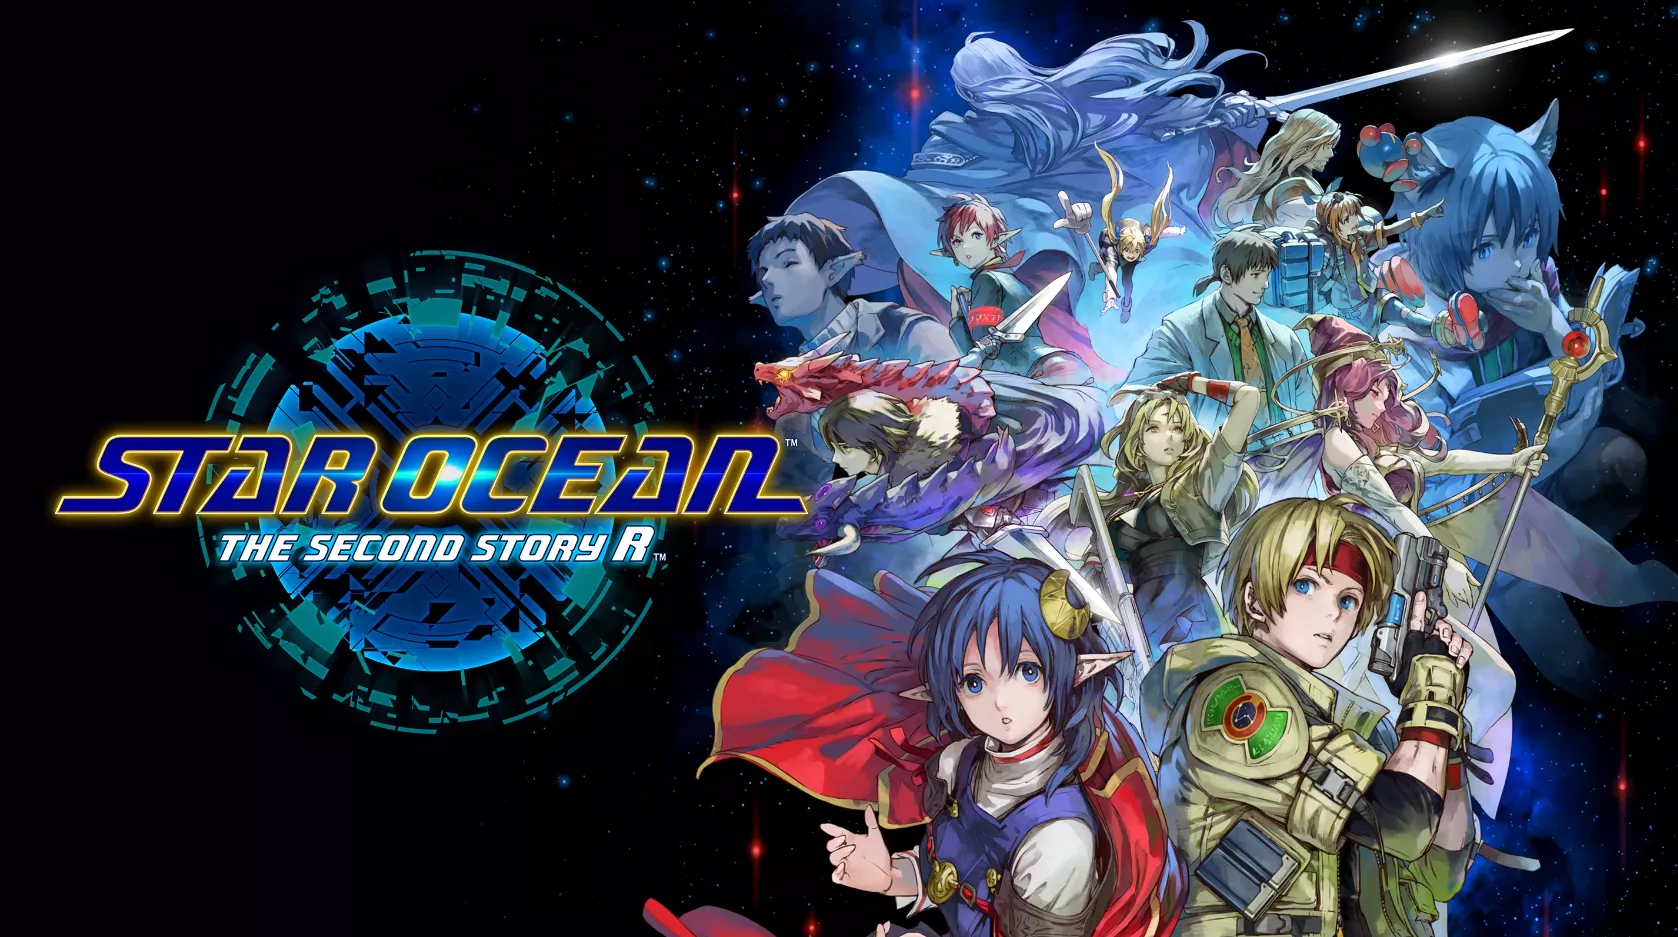 Star Ocean: The Second Story R version 1.1 für den 27. März angekündigt Heropic